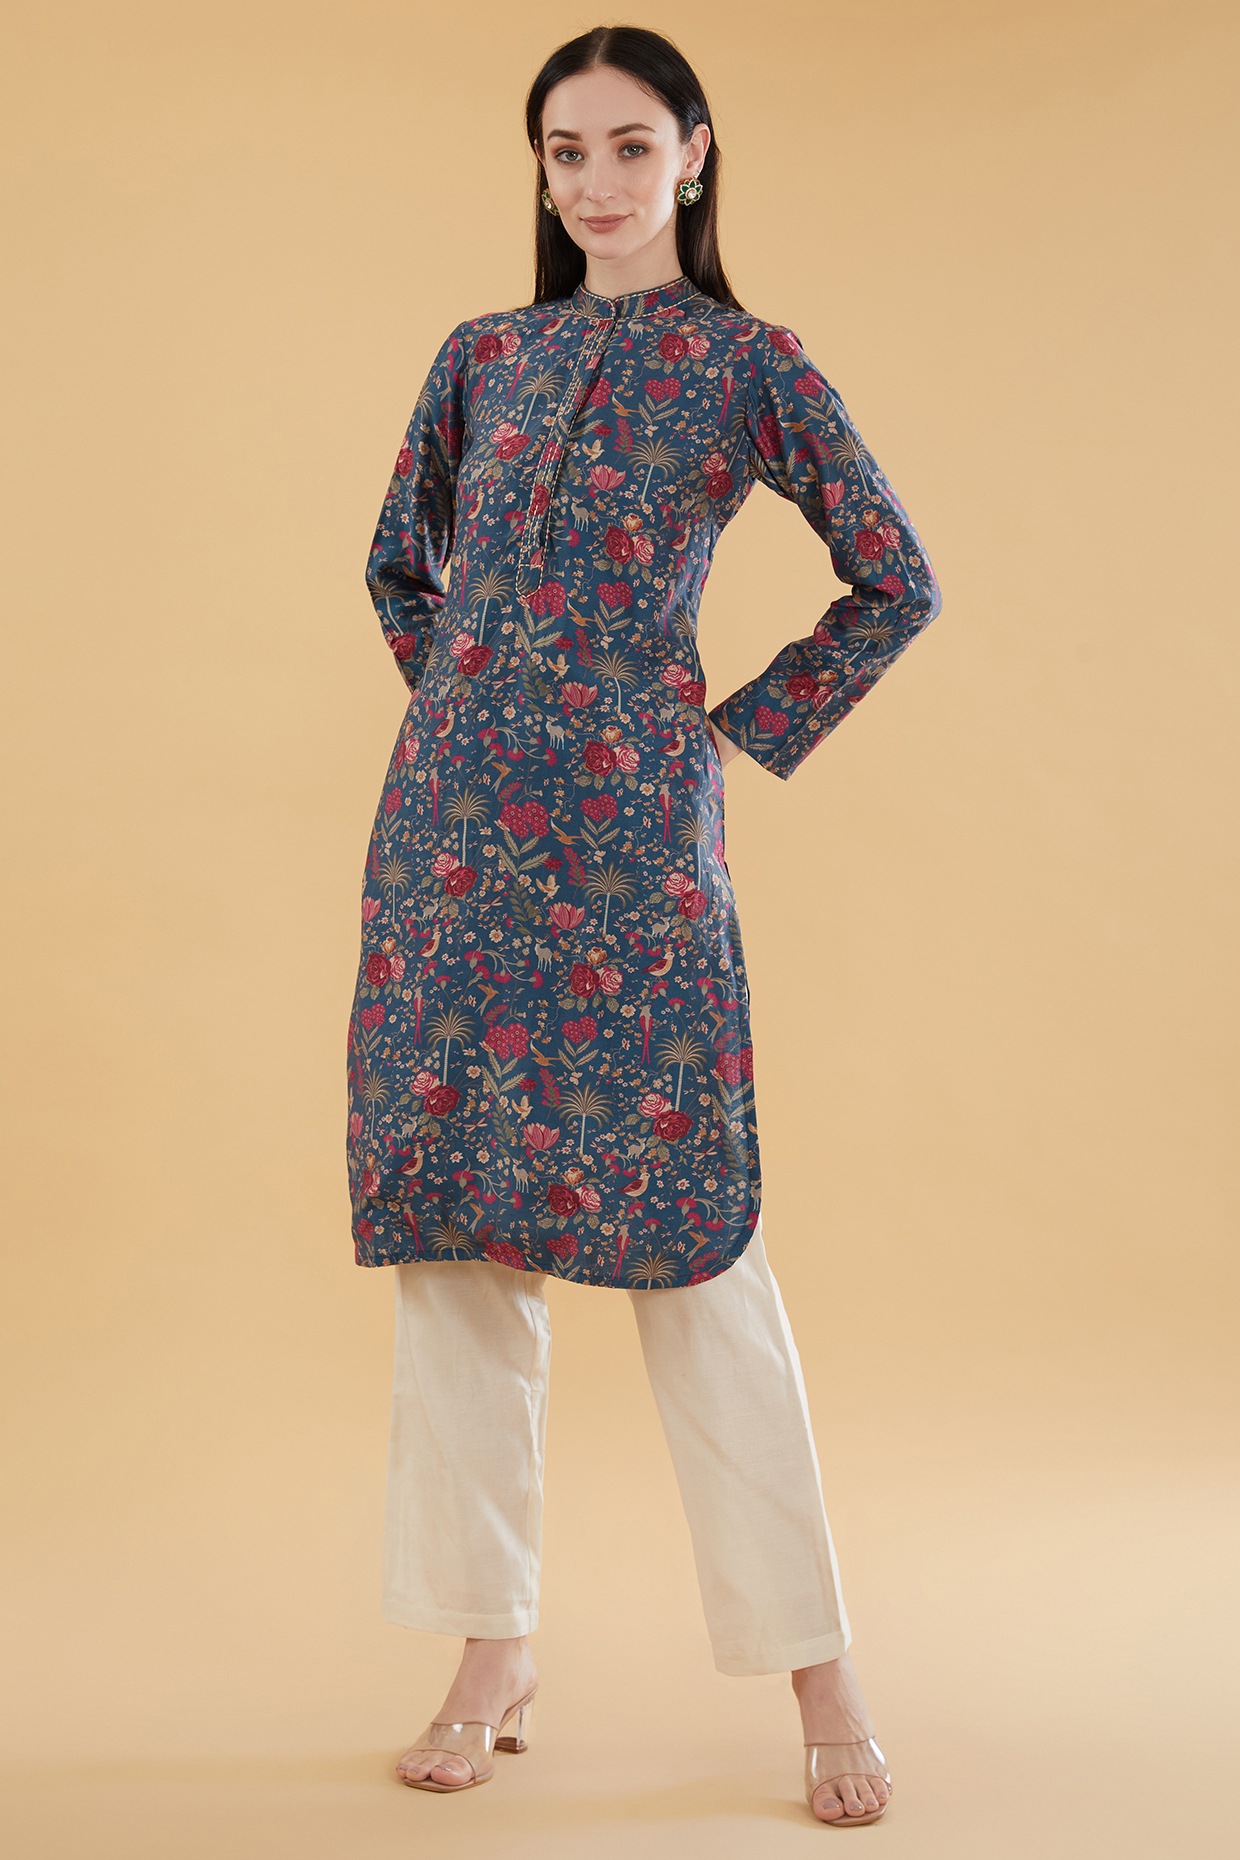 Buy patiala dress punjabi yellow sunshine real Mirror work /heavy  embroidery work /dress material at Amazon.in